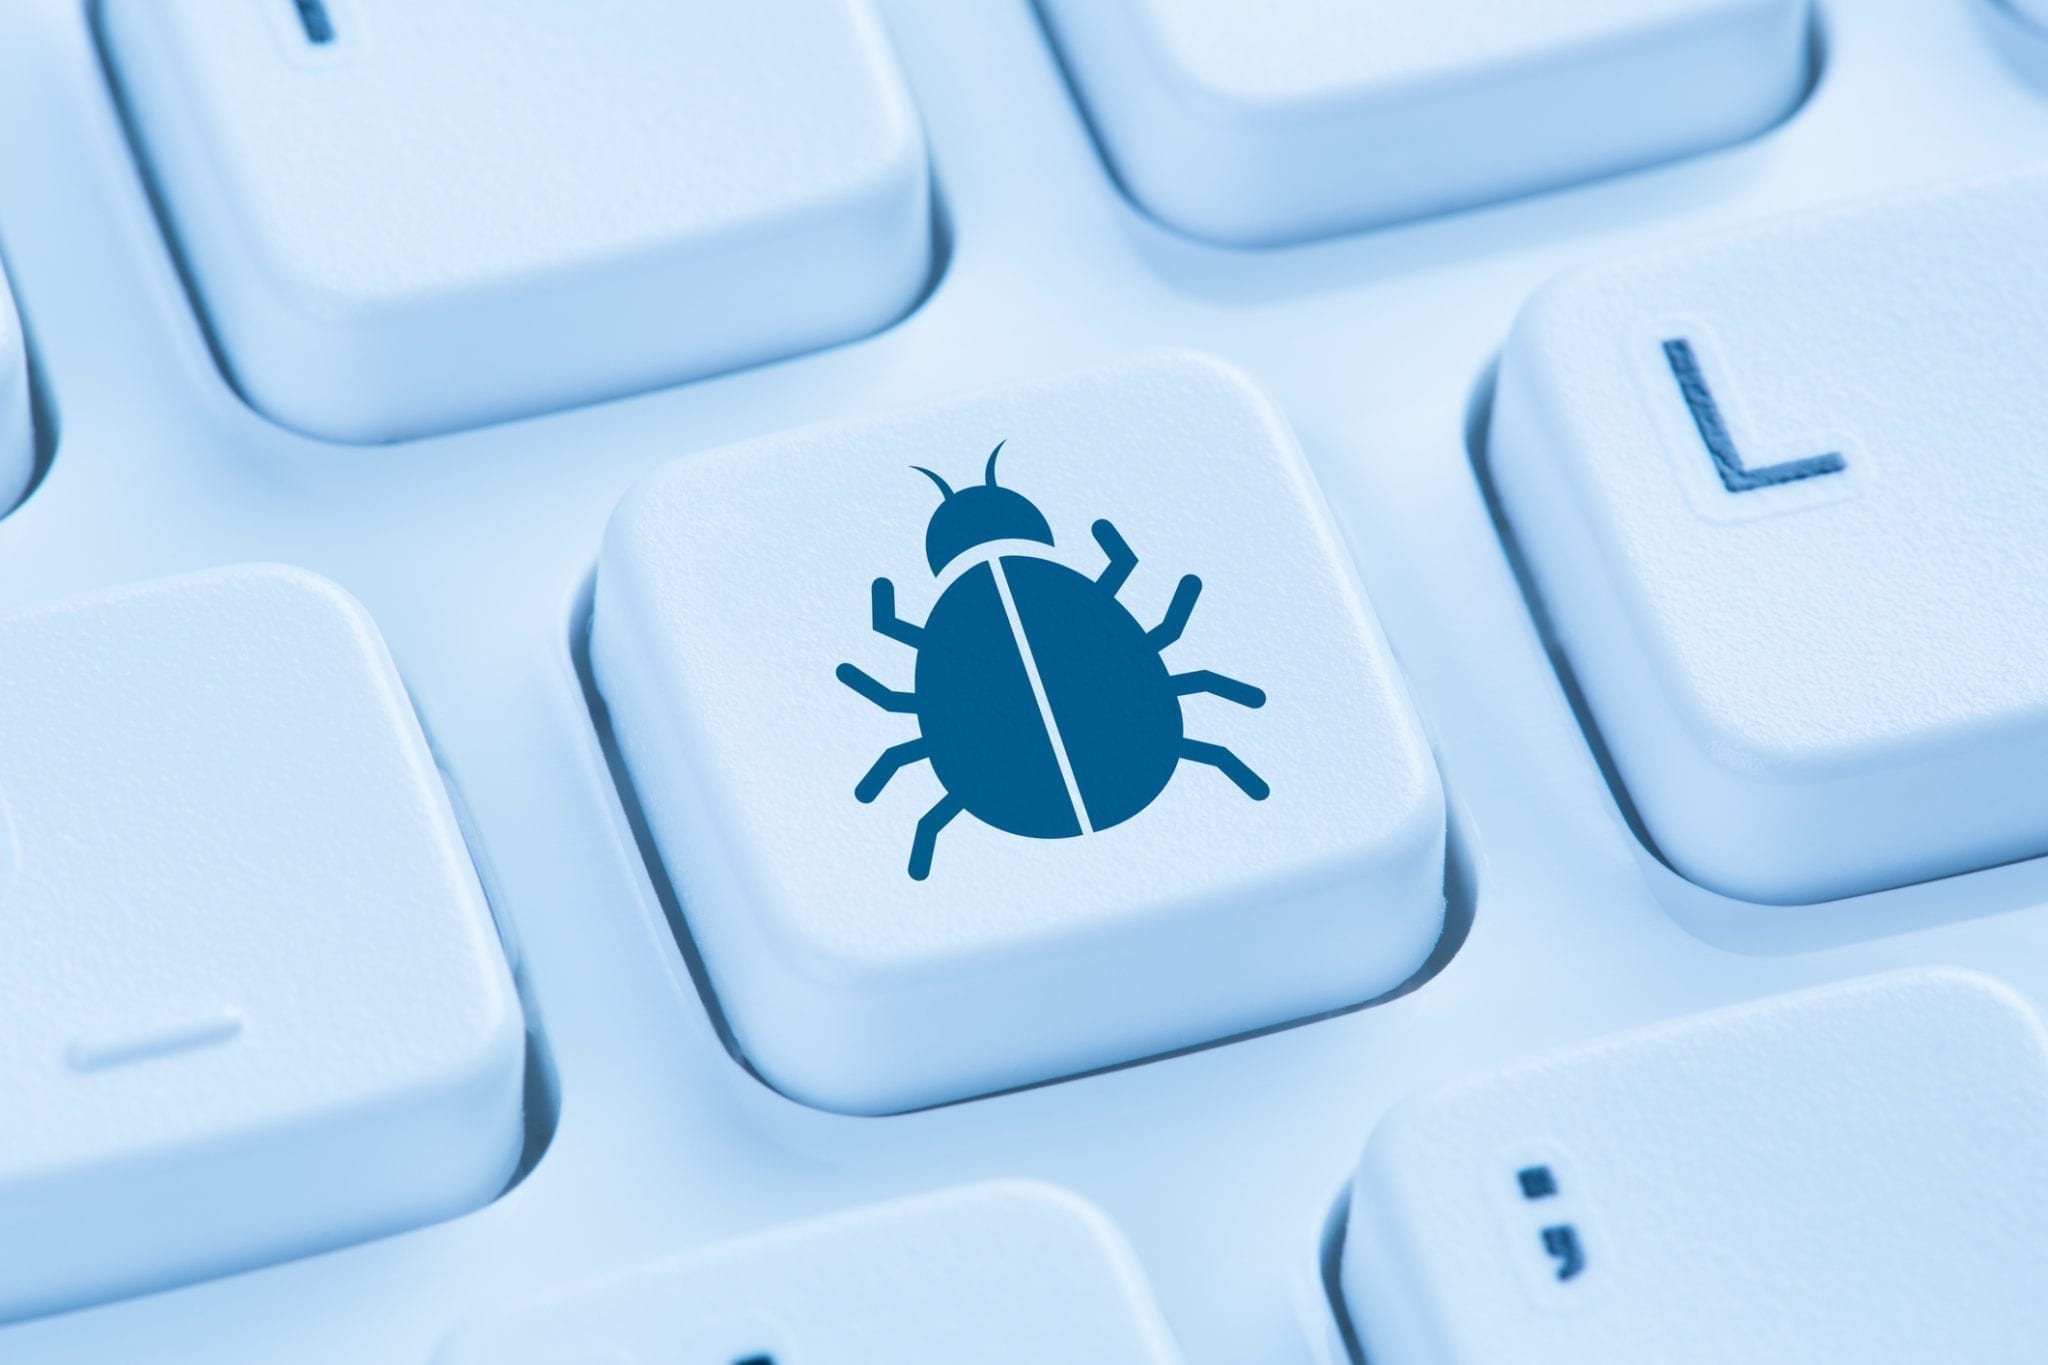 Computer virus Trojan network security blue internet keyboard